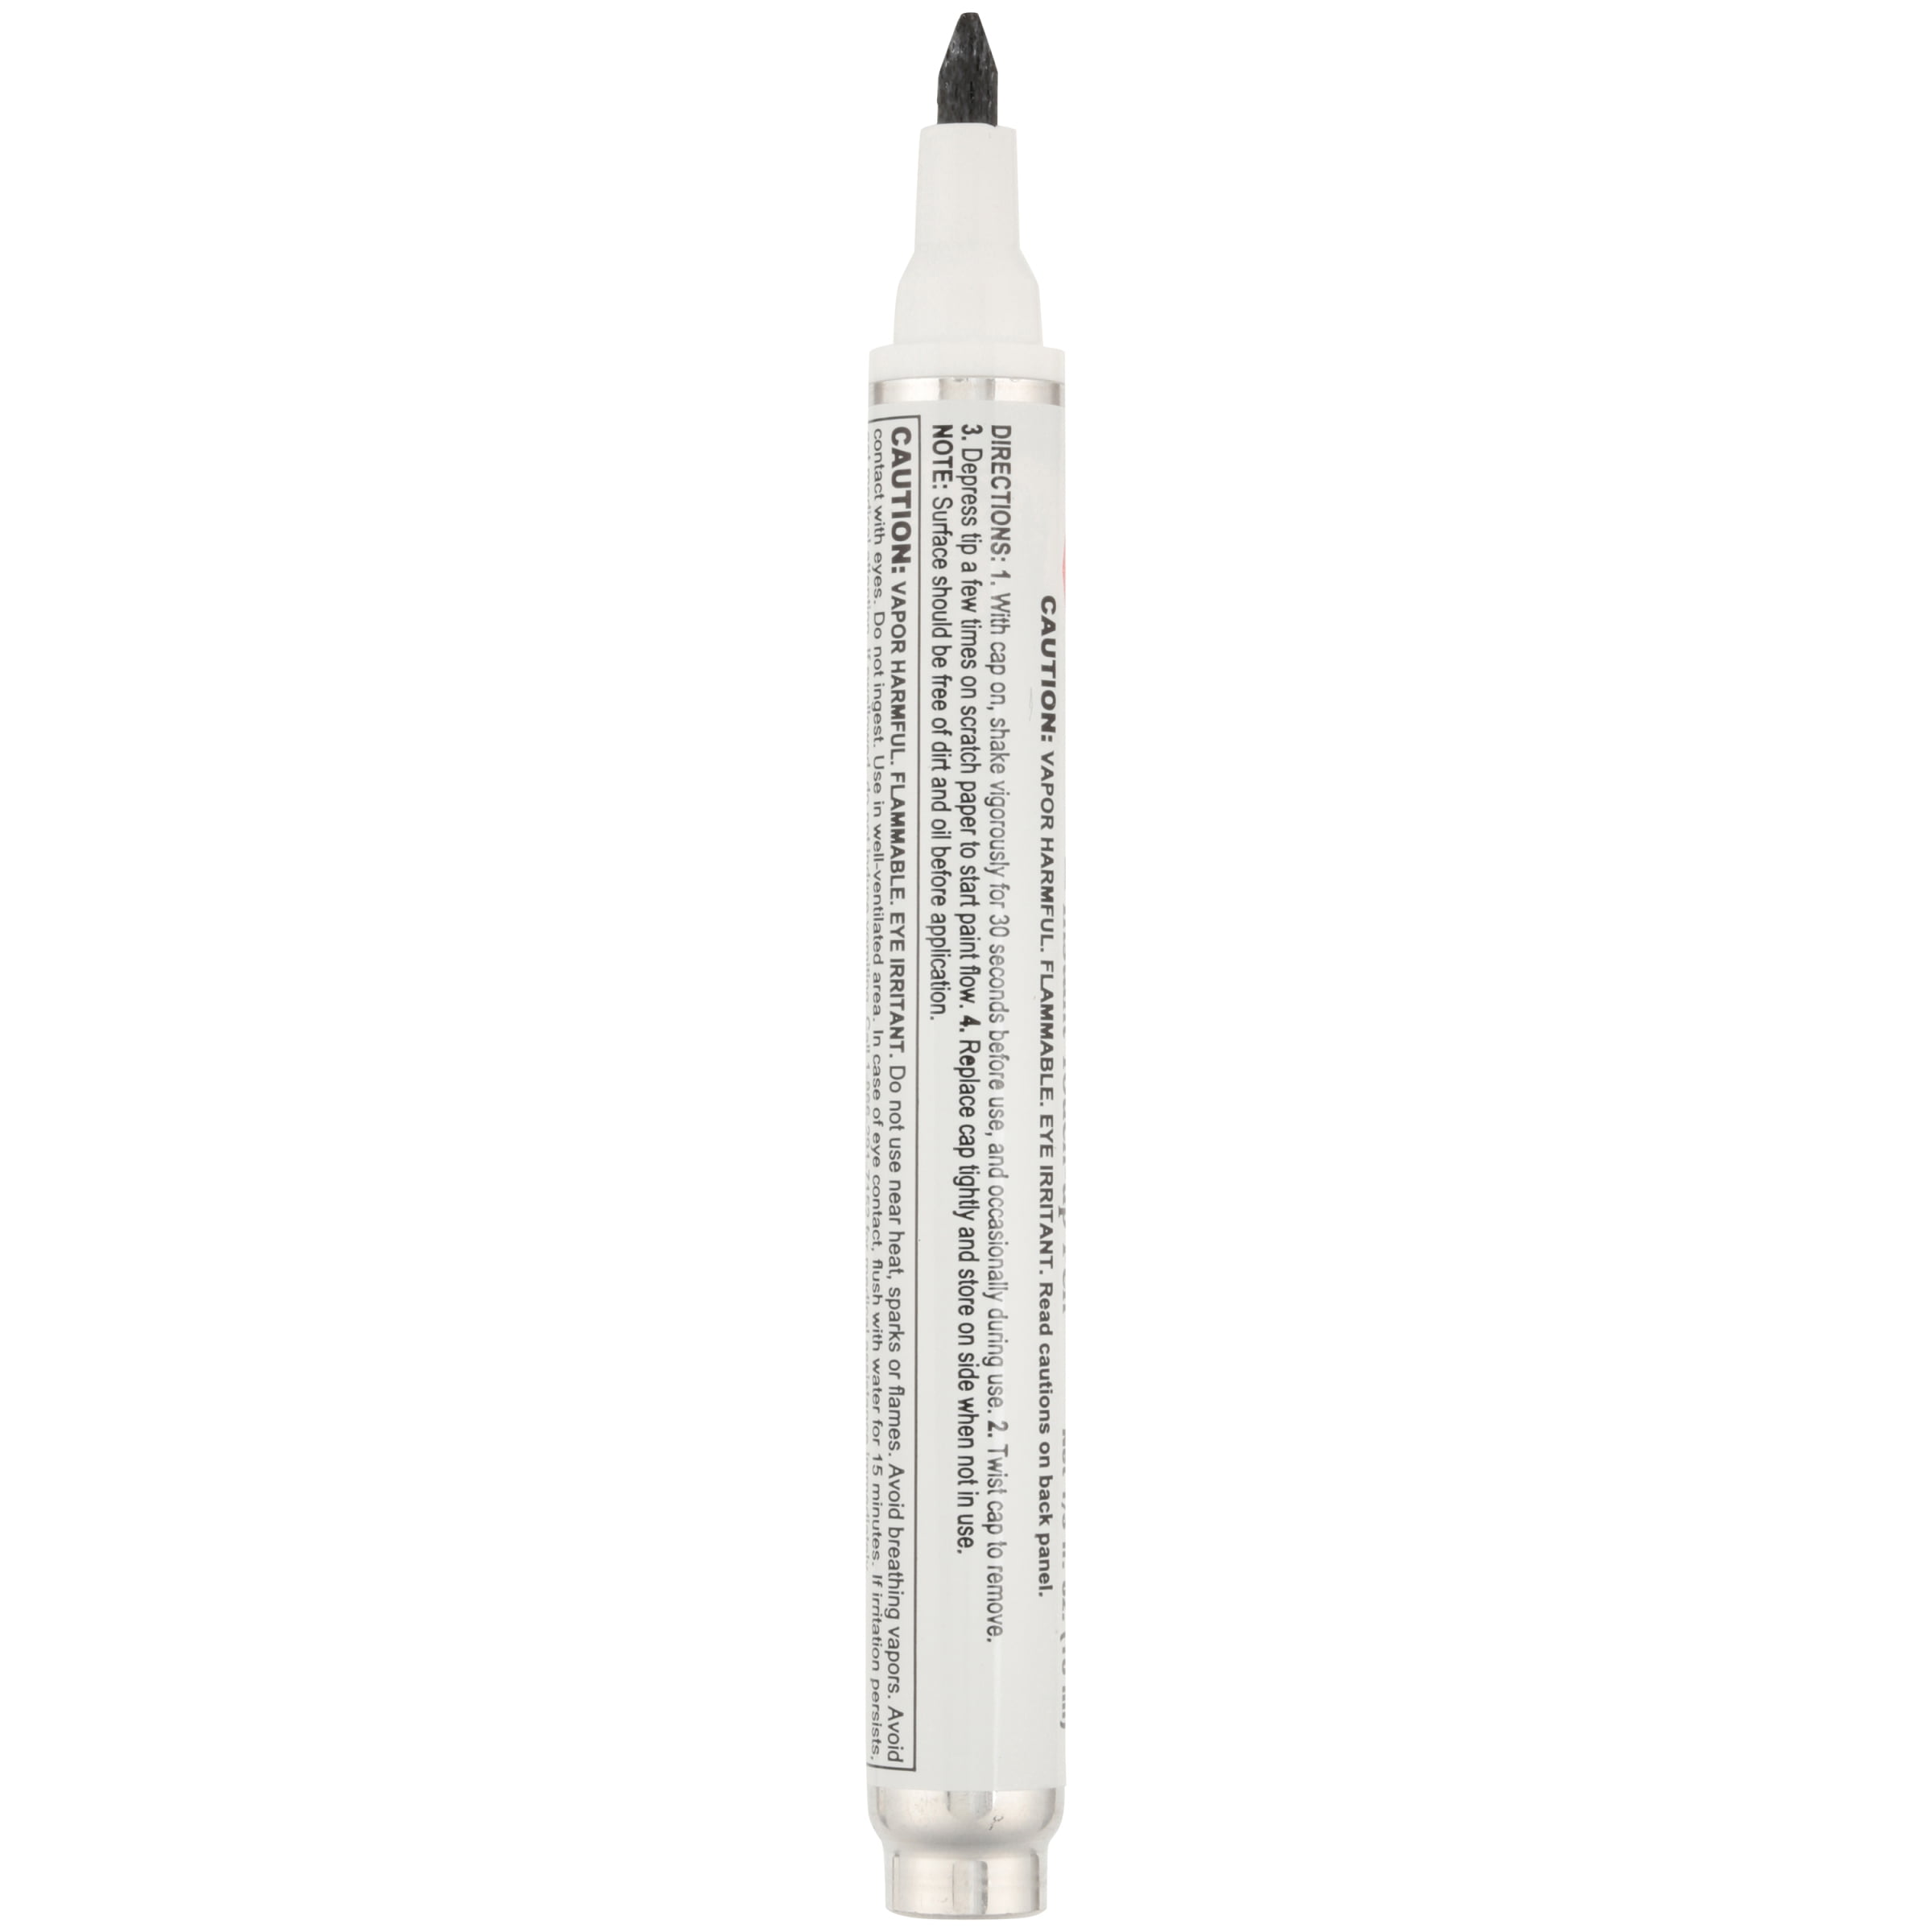 Birchwood Casey Super Black Touch-Up Pen, Instant, Flat Black - 0.33 fl oz